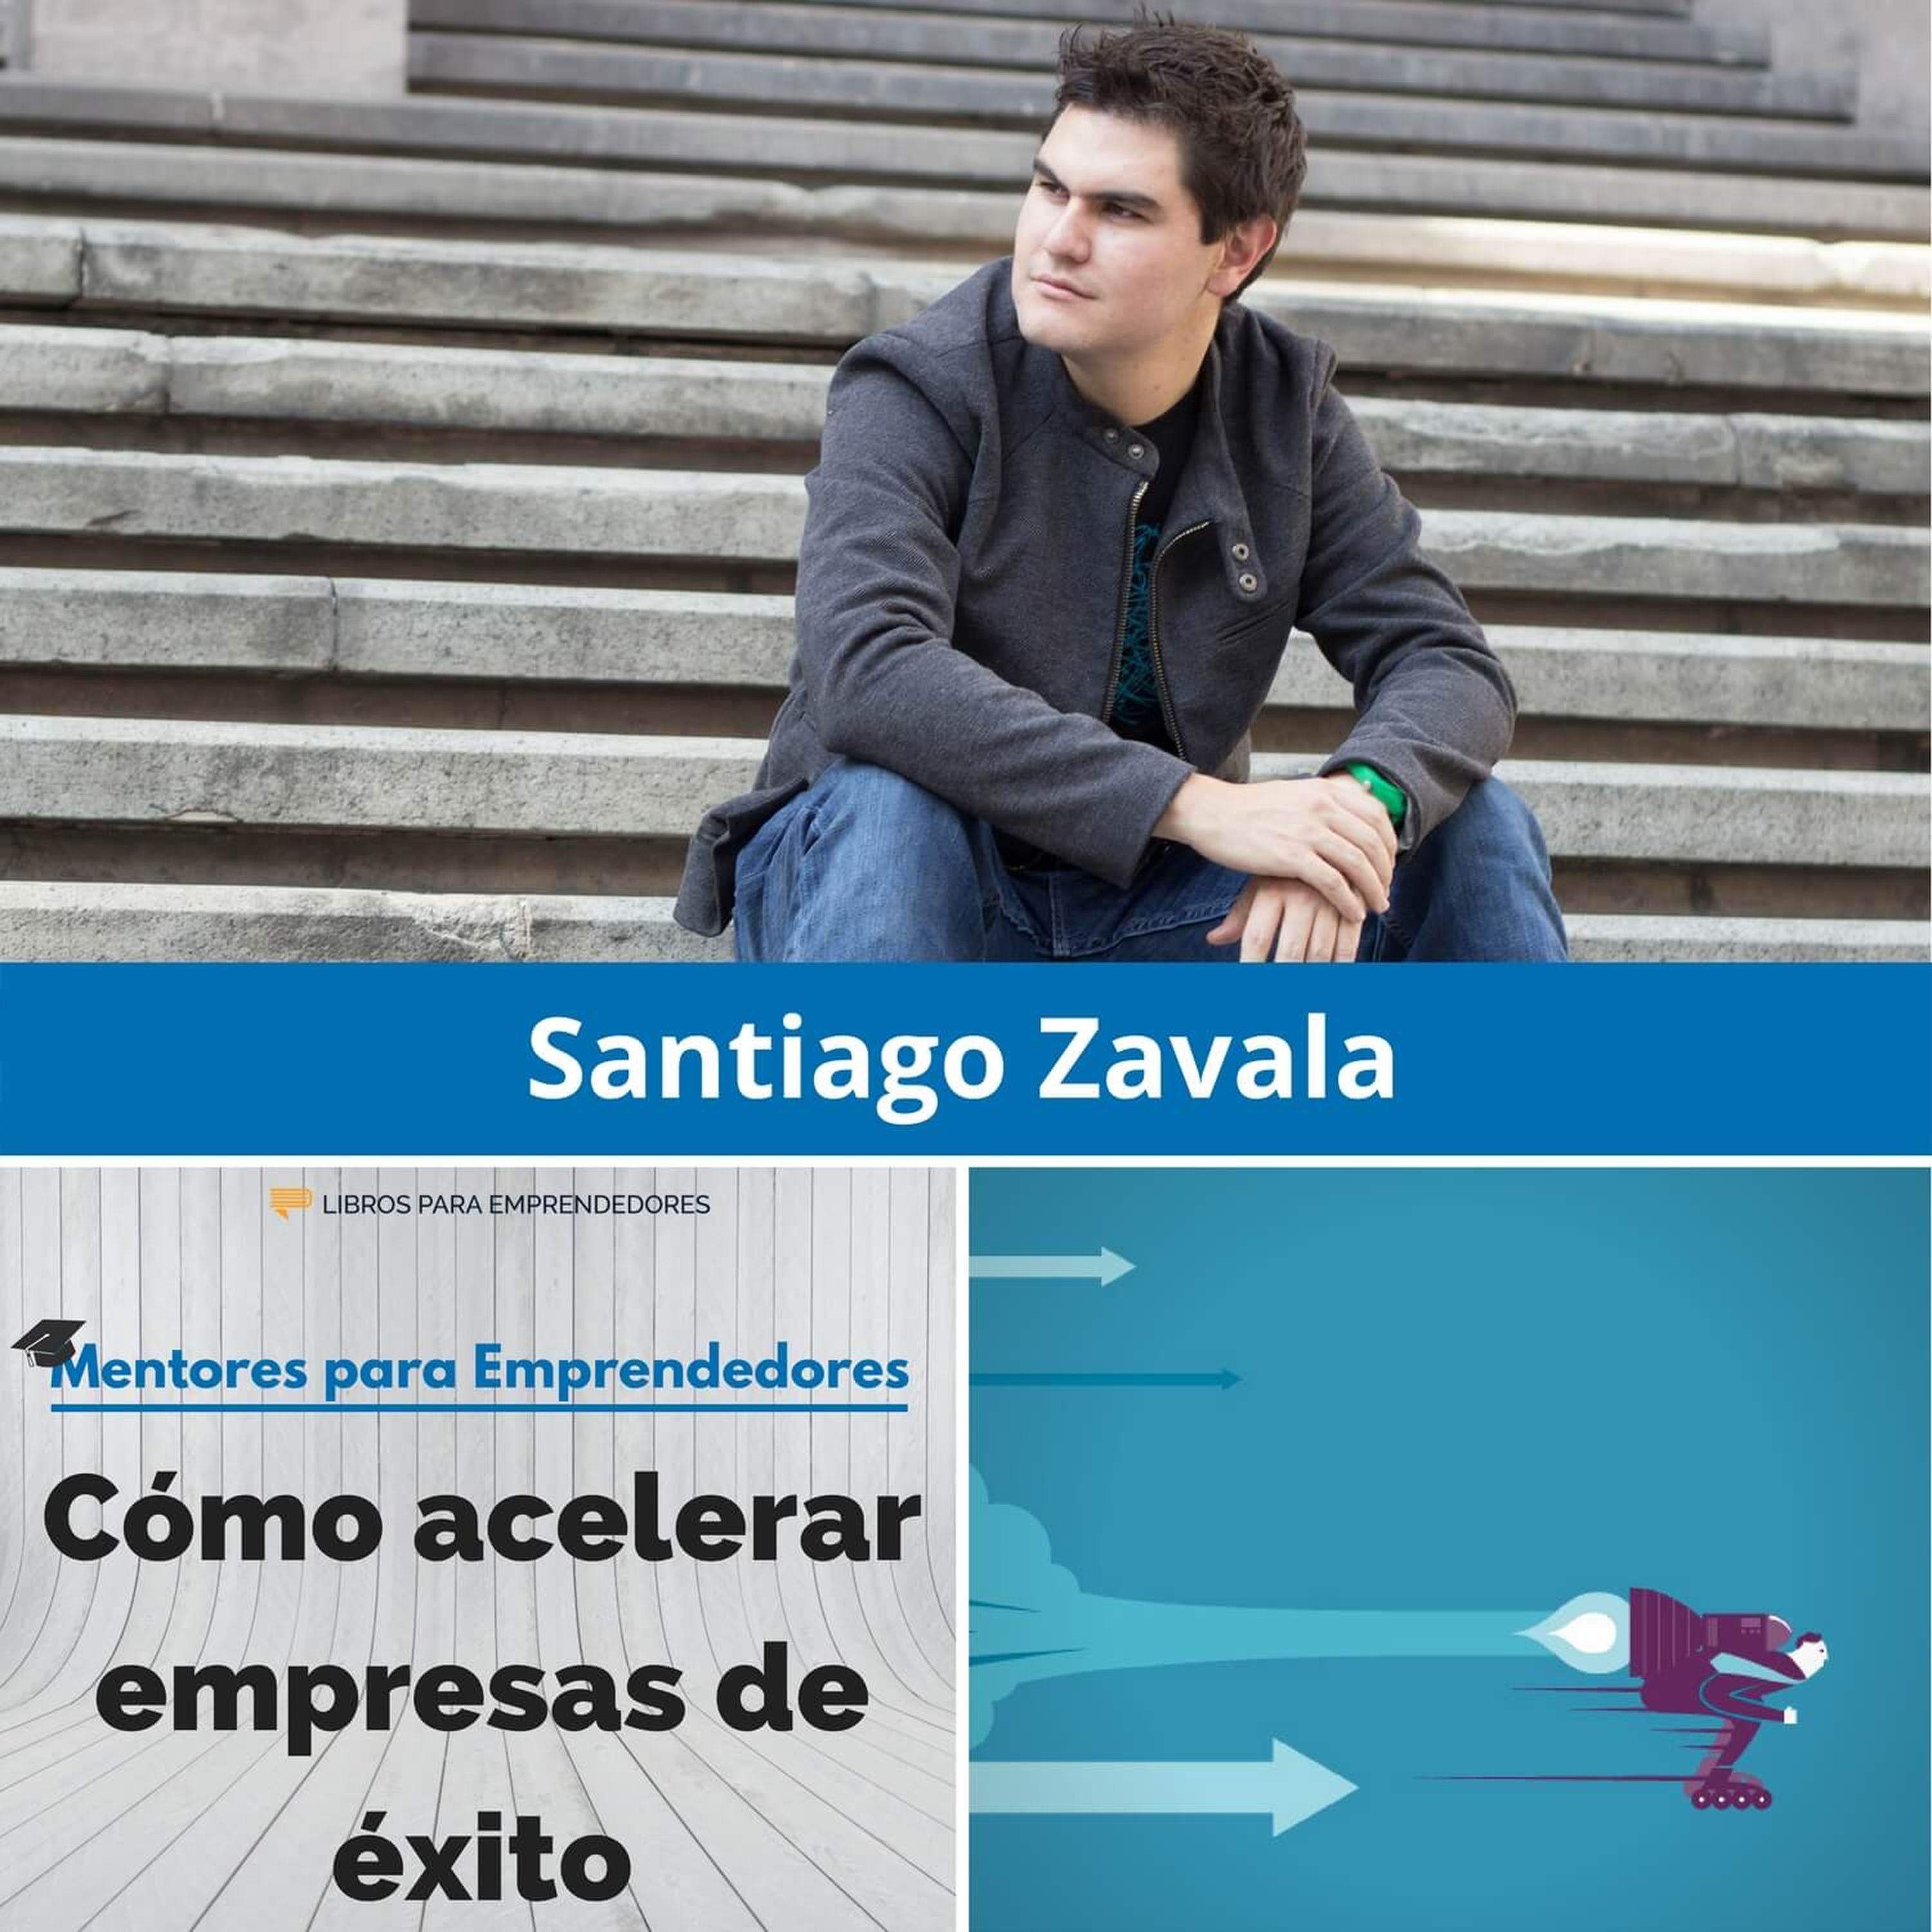 Cómo acelerar empresas de éxito, con Santiago Zavala - MPE024 - Mentores para Emprendedores